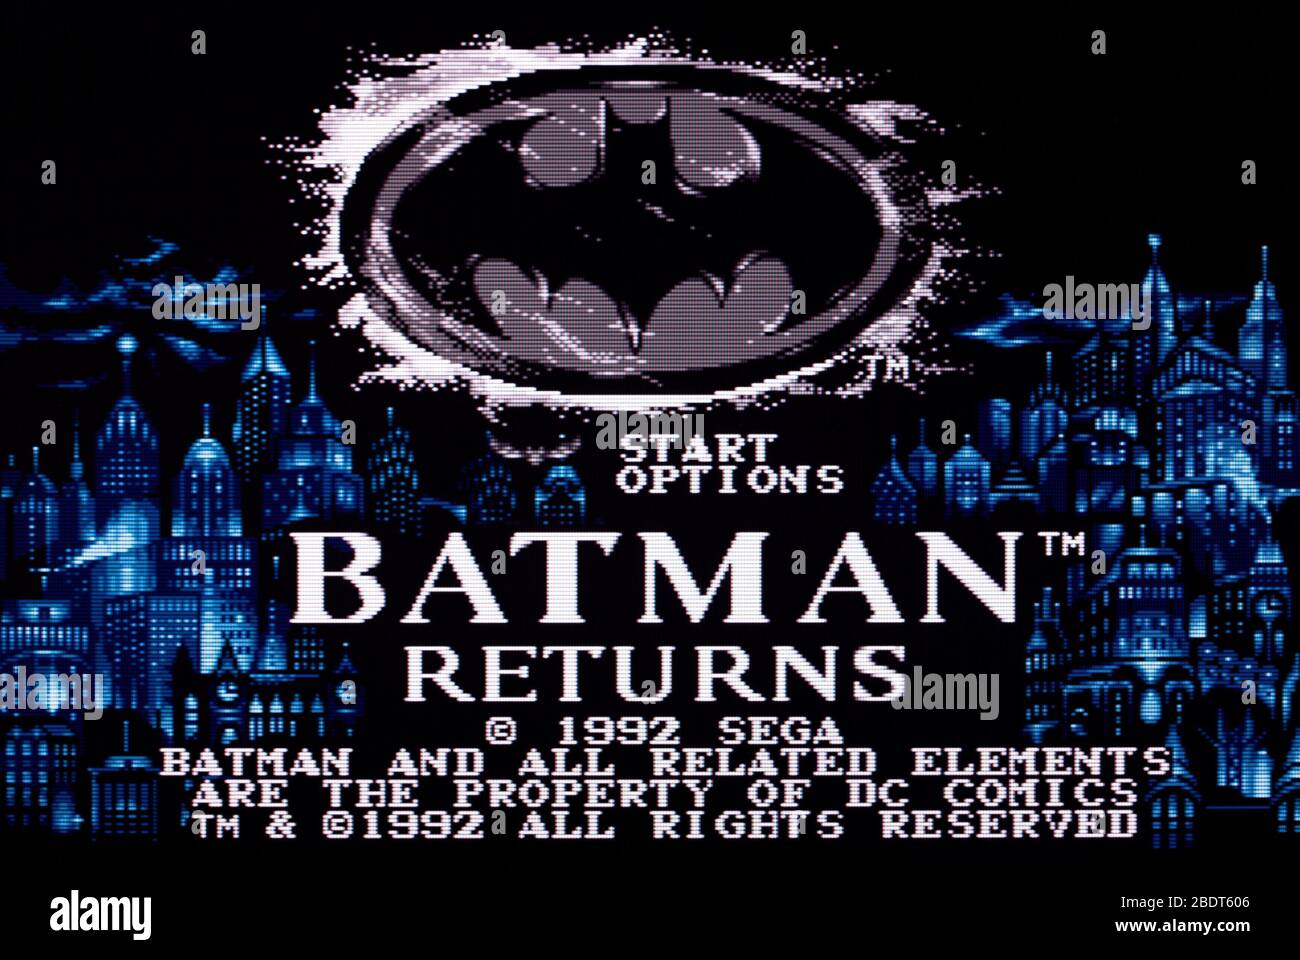 Batman Returns - Sega Genesis Mega Drive - Editorial use only Stock Photo -  Alamy